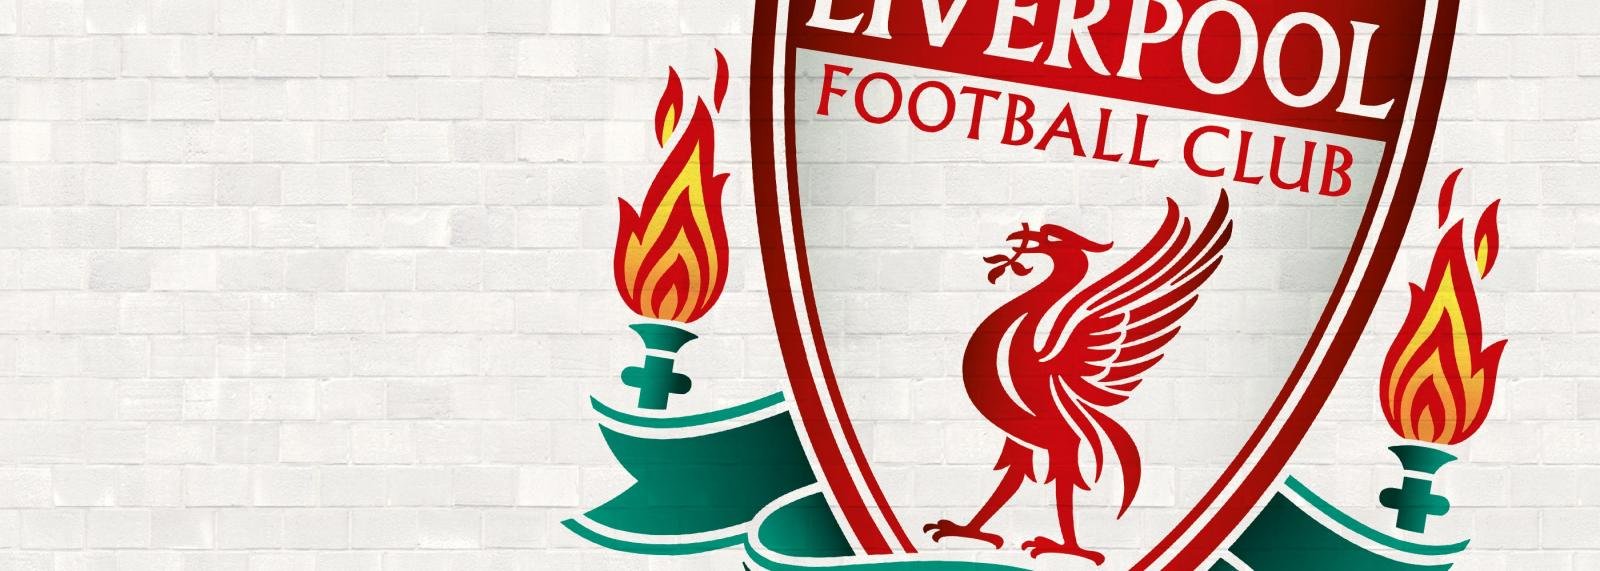 Liverpool target Sevilla’s £7.9m-rated international goalkeeper